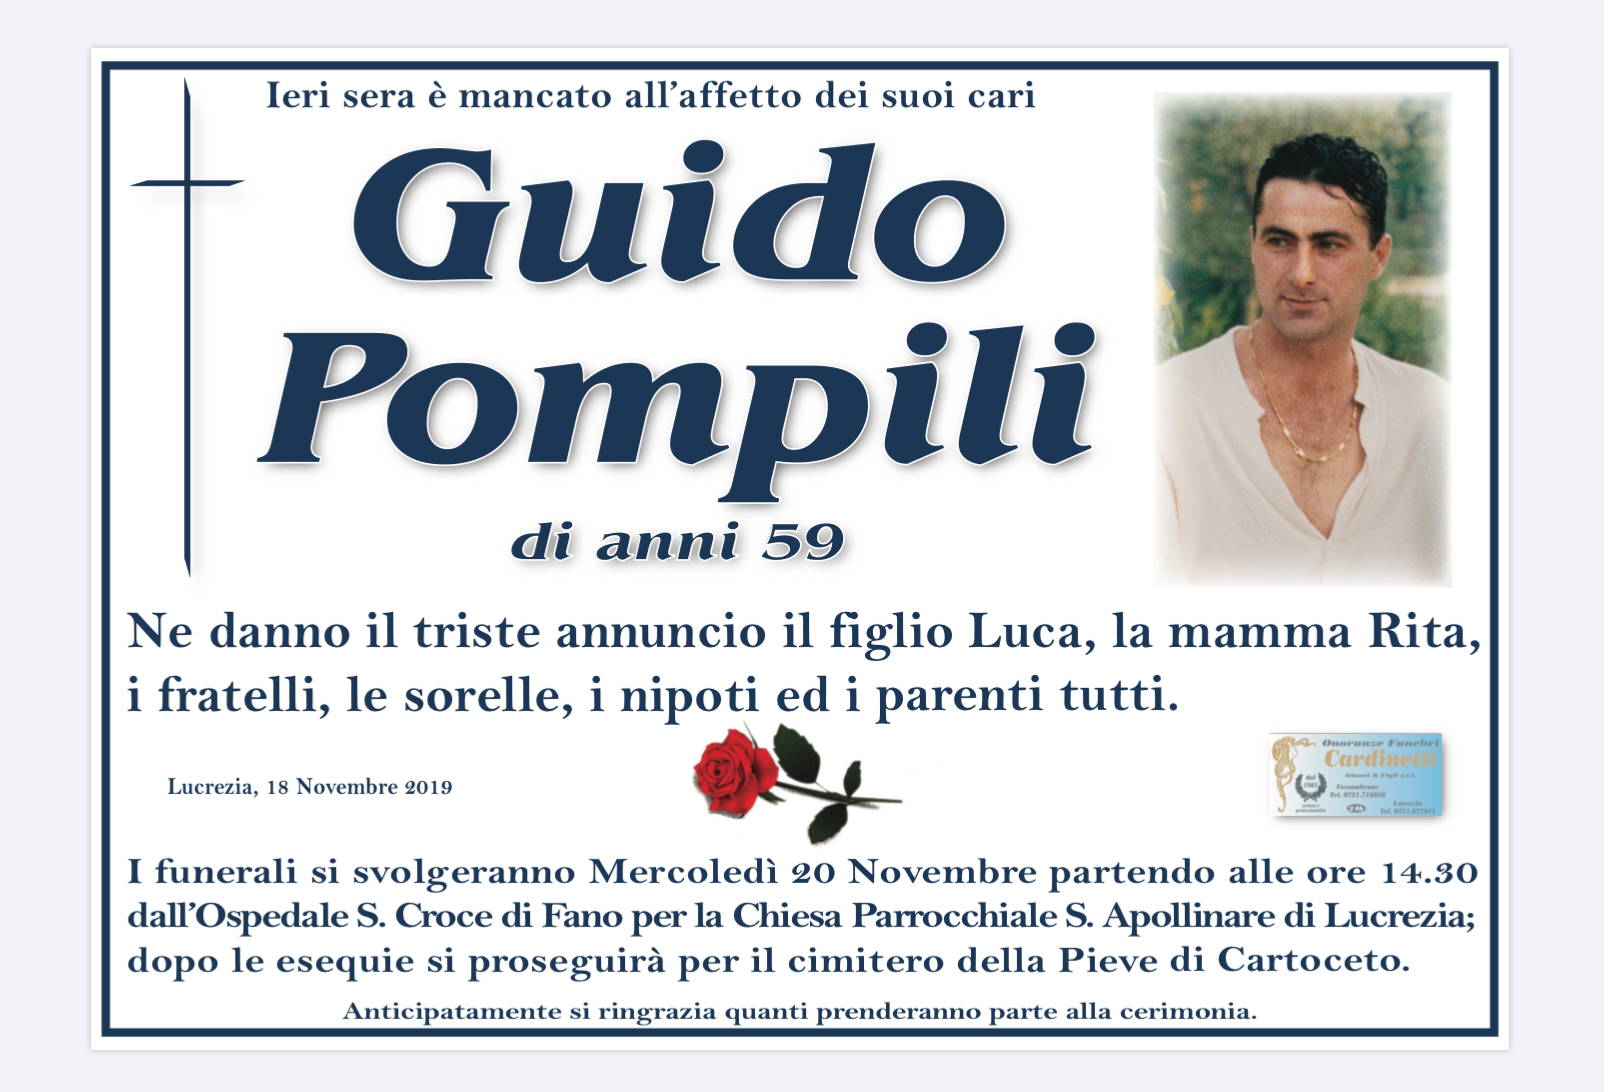 Guido Pompili